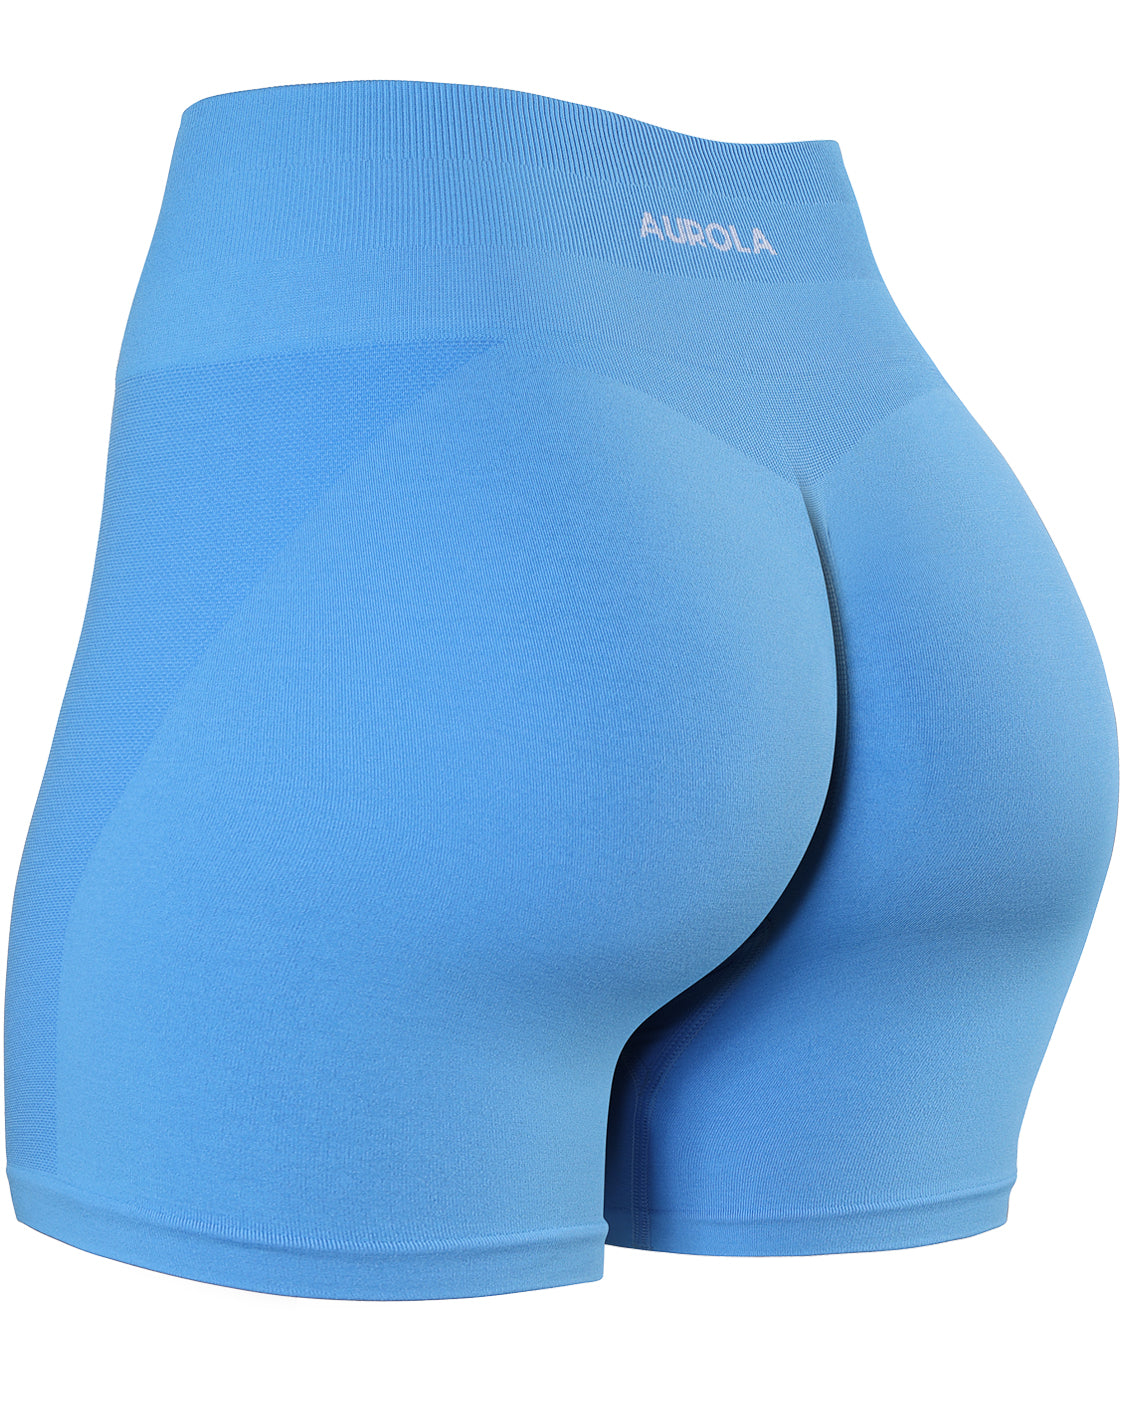 AUROLA Women's Workout Shorts